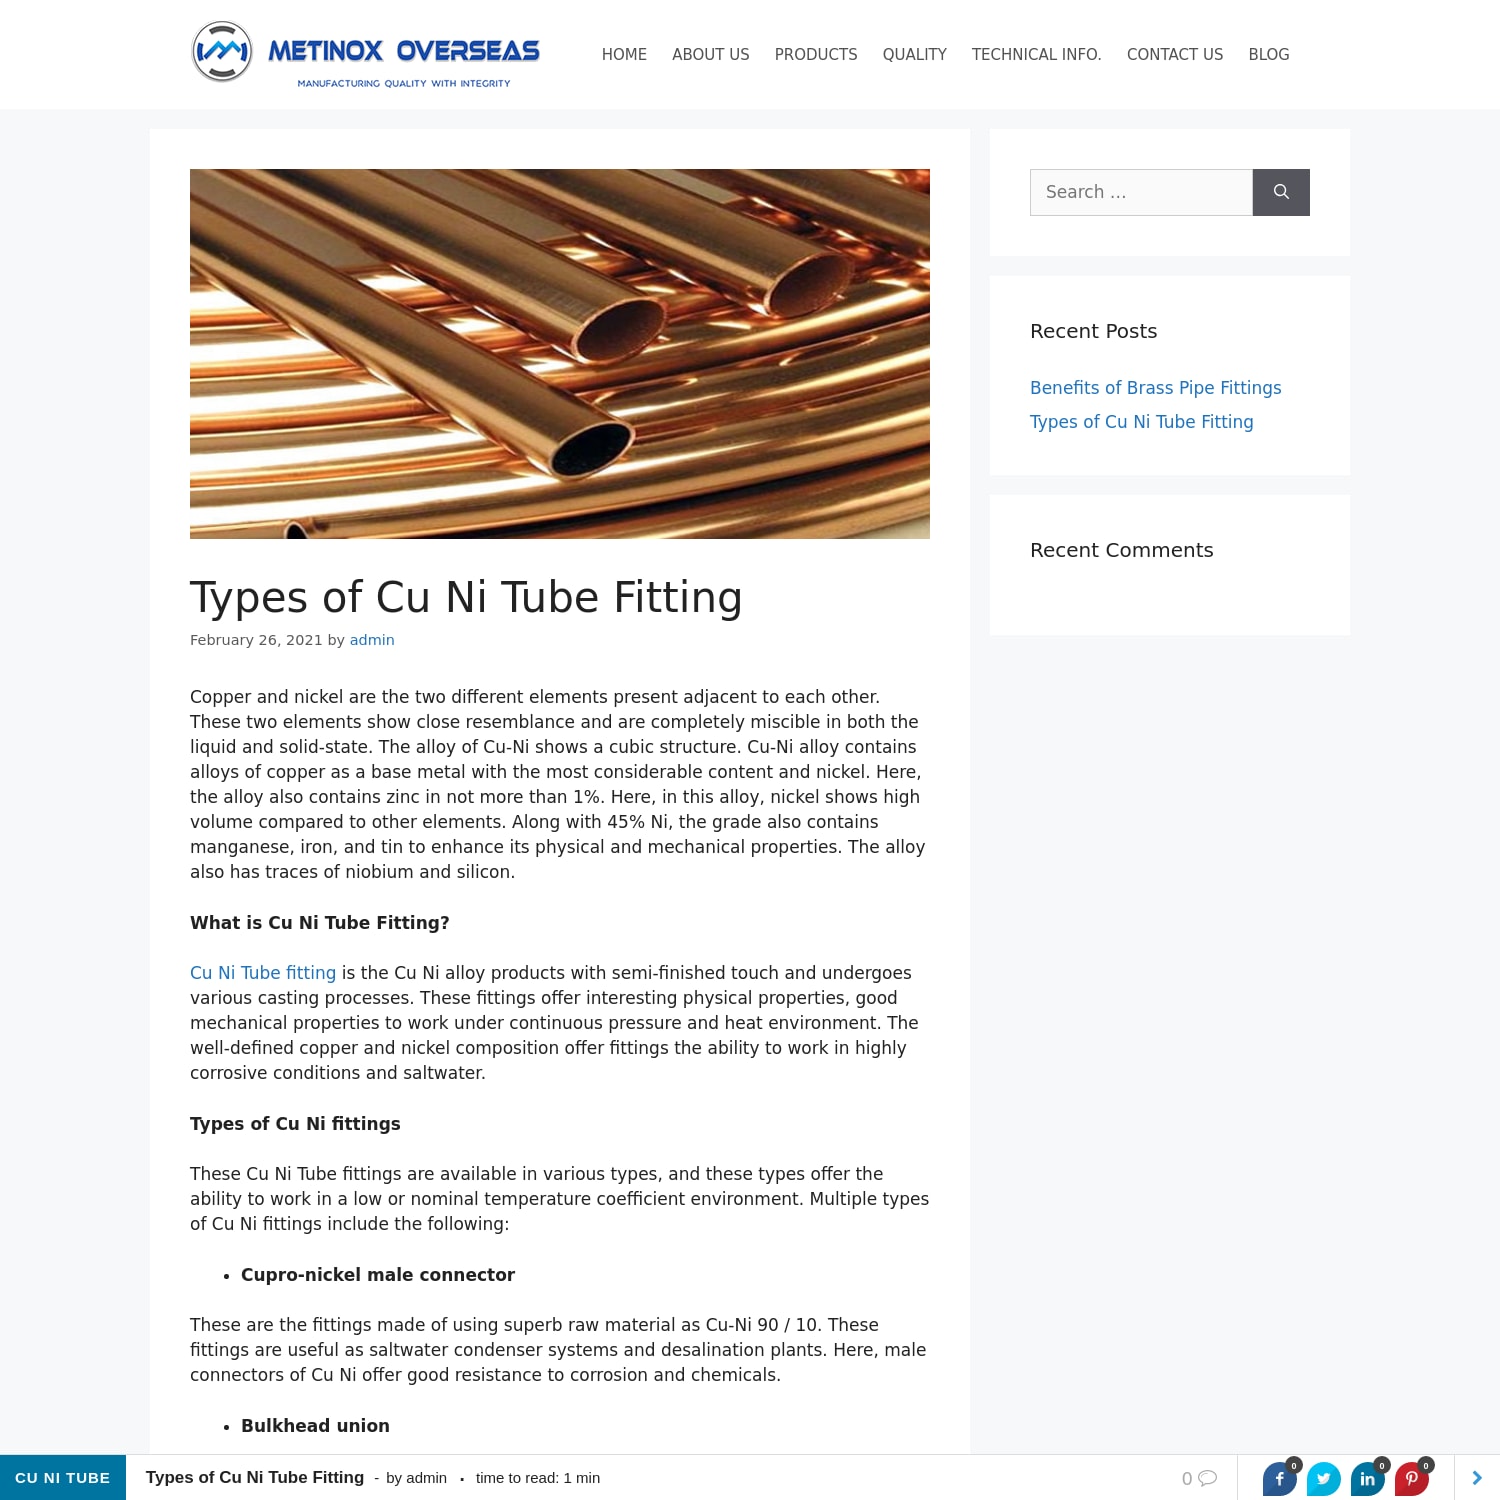 Blog on Stainless Steel, Duplex Steel, Super Duplex Steel Pipe Fittings